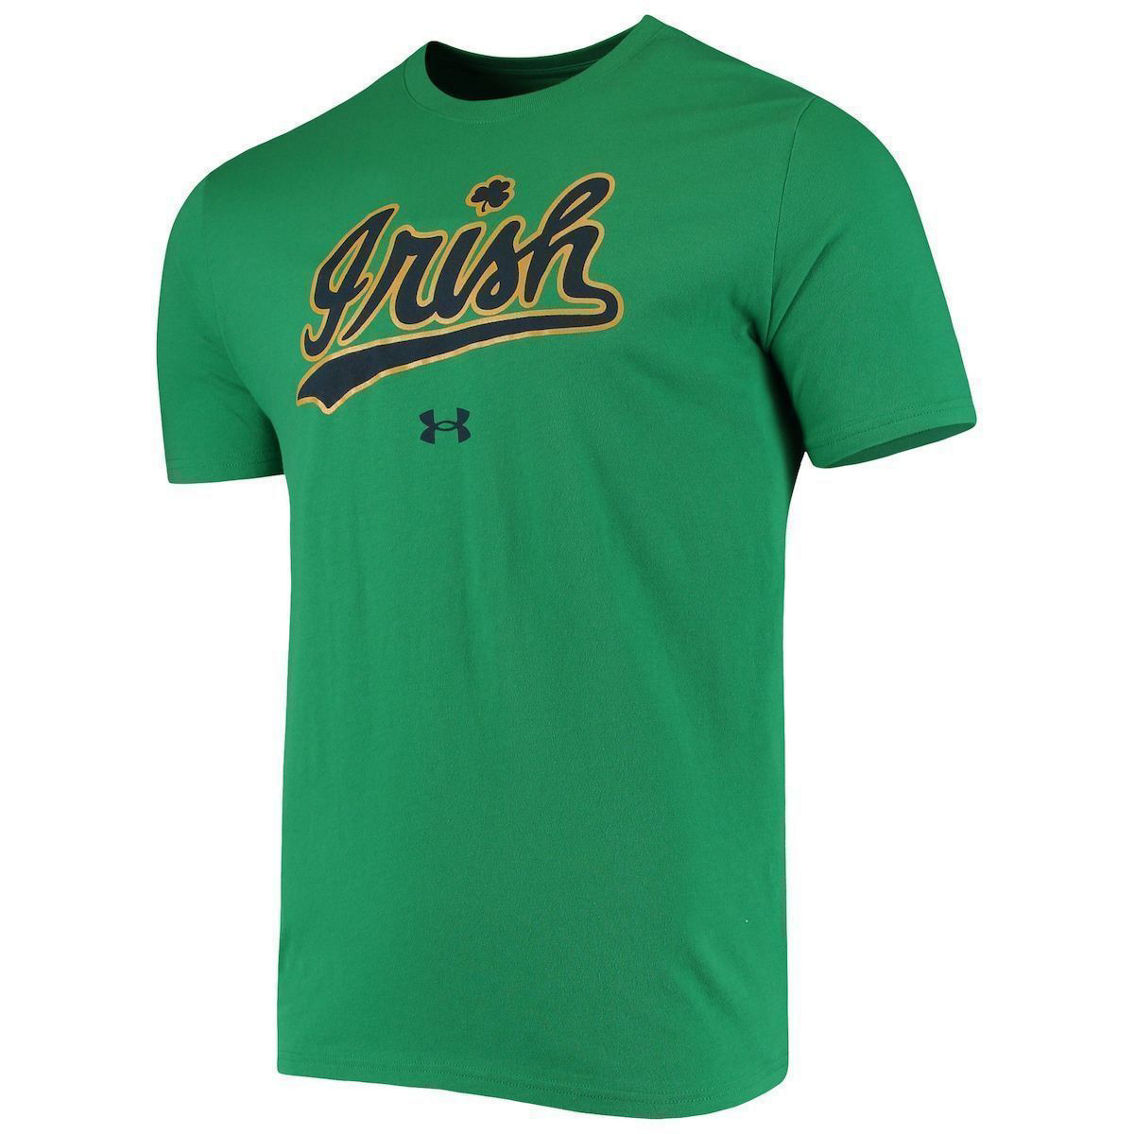 Under Armour Men's Kelly Green Notre Dame Fighting Irish Wordmark Logo Performance Cotton T-Shirt - Image 3 of 4